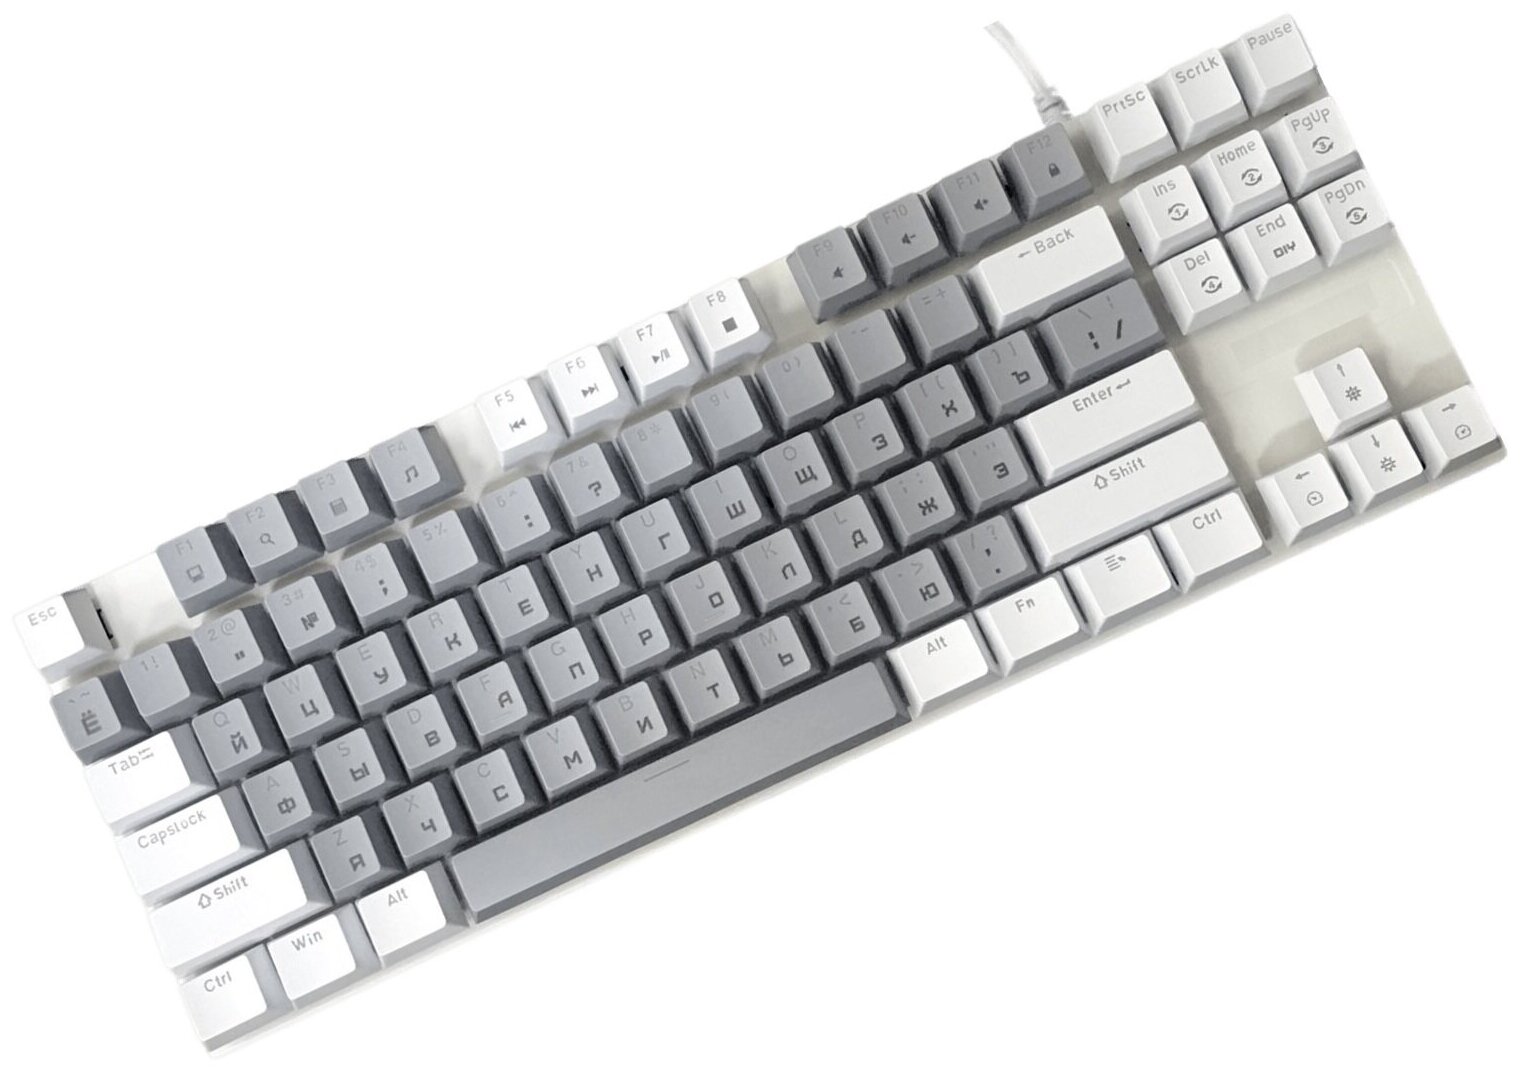 Игровая клавиатура Booox K87 Red Switch, серый/белый, кириллица+QWERTY